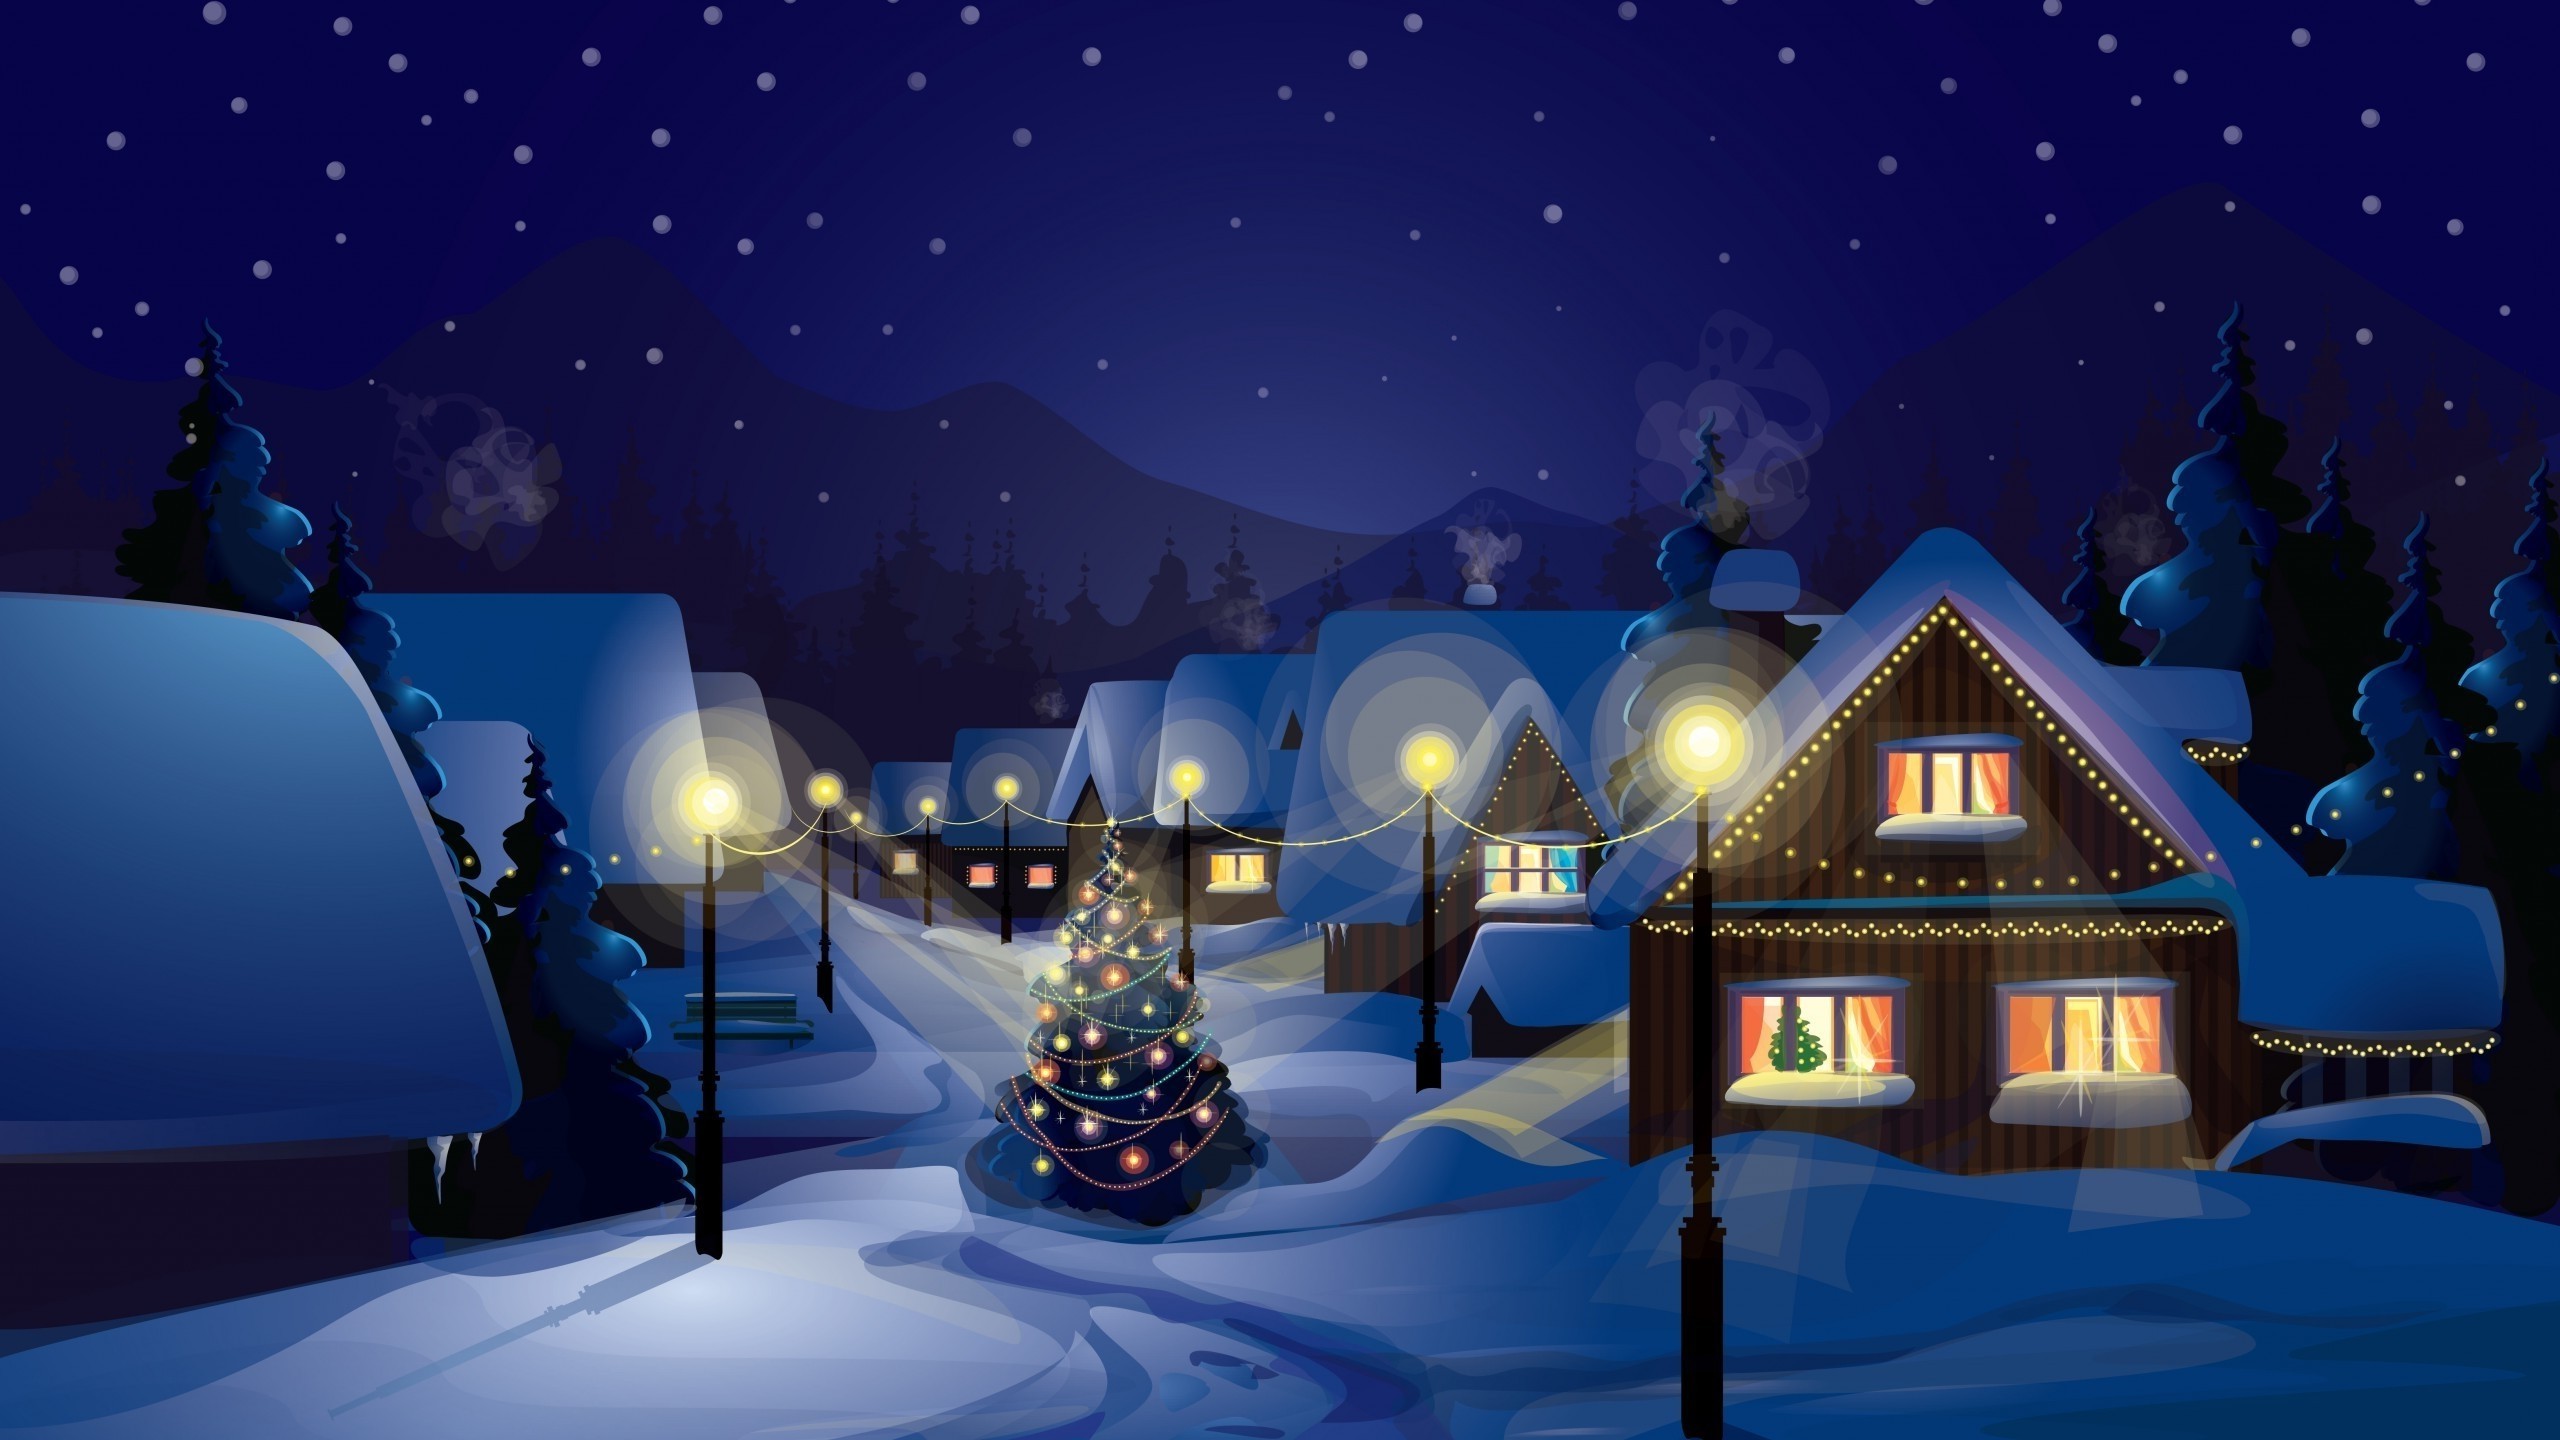 Christmas Village Background